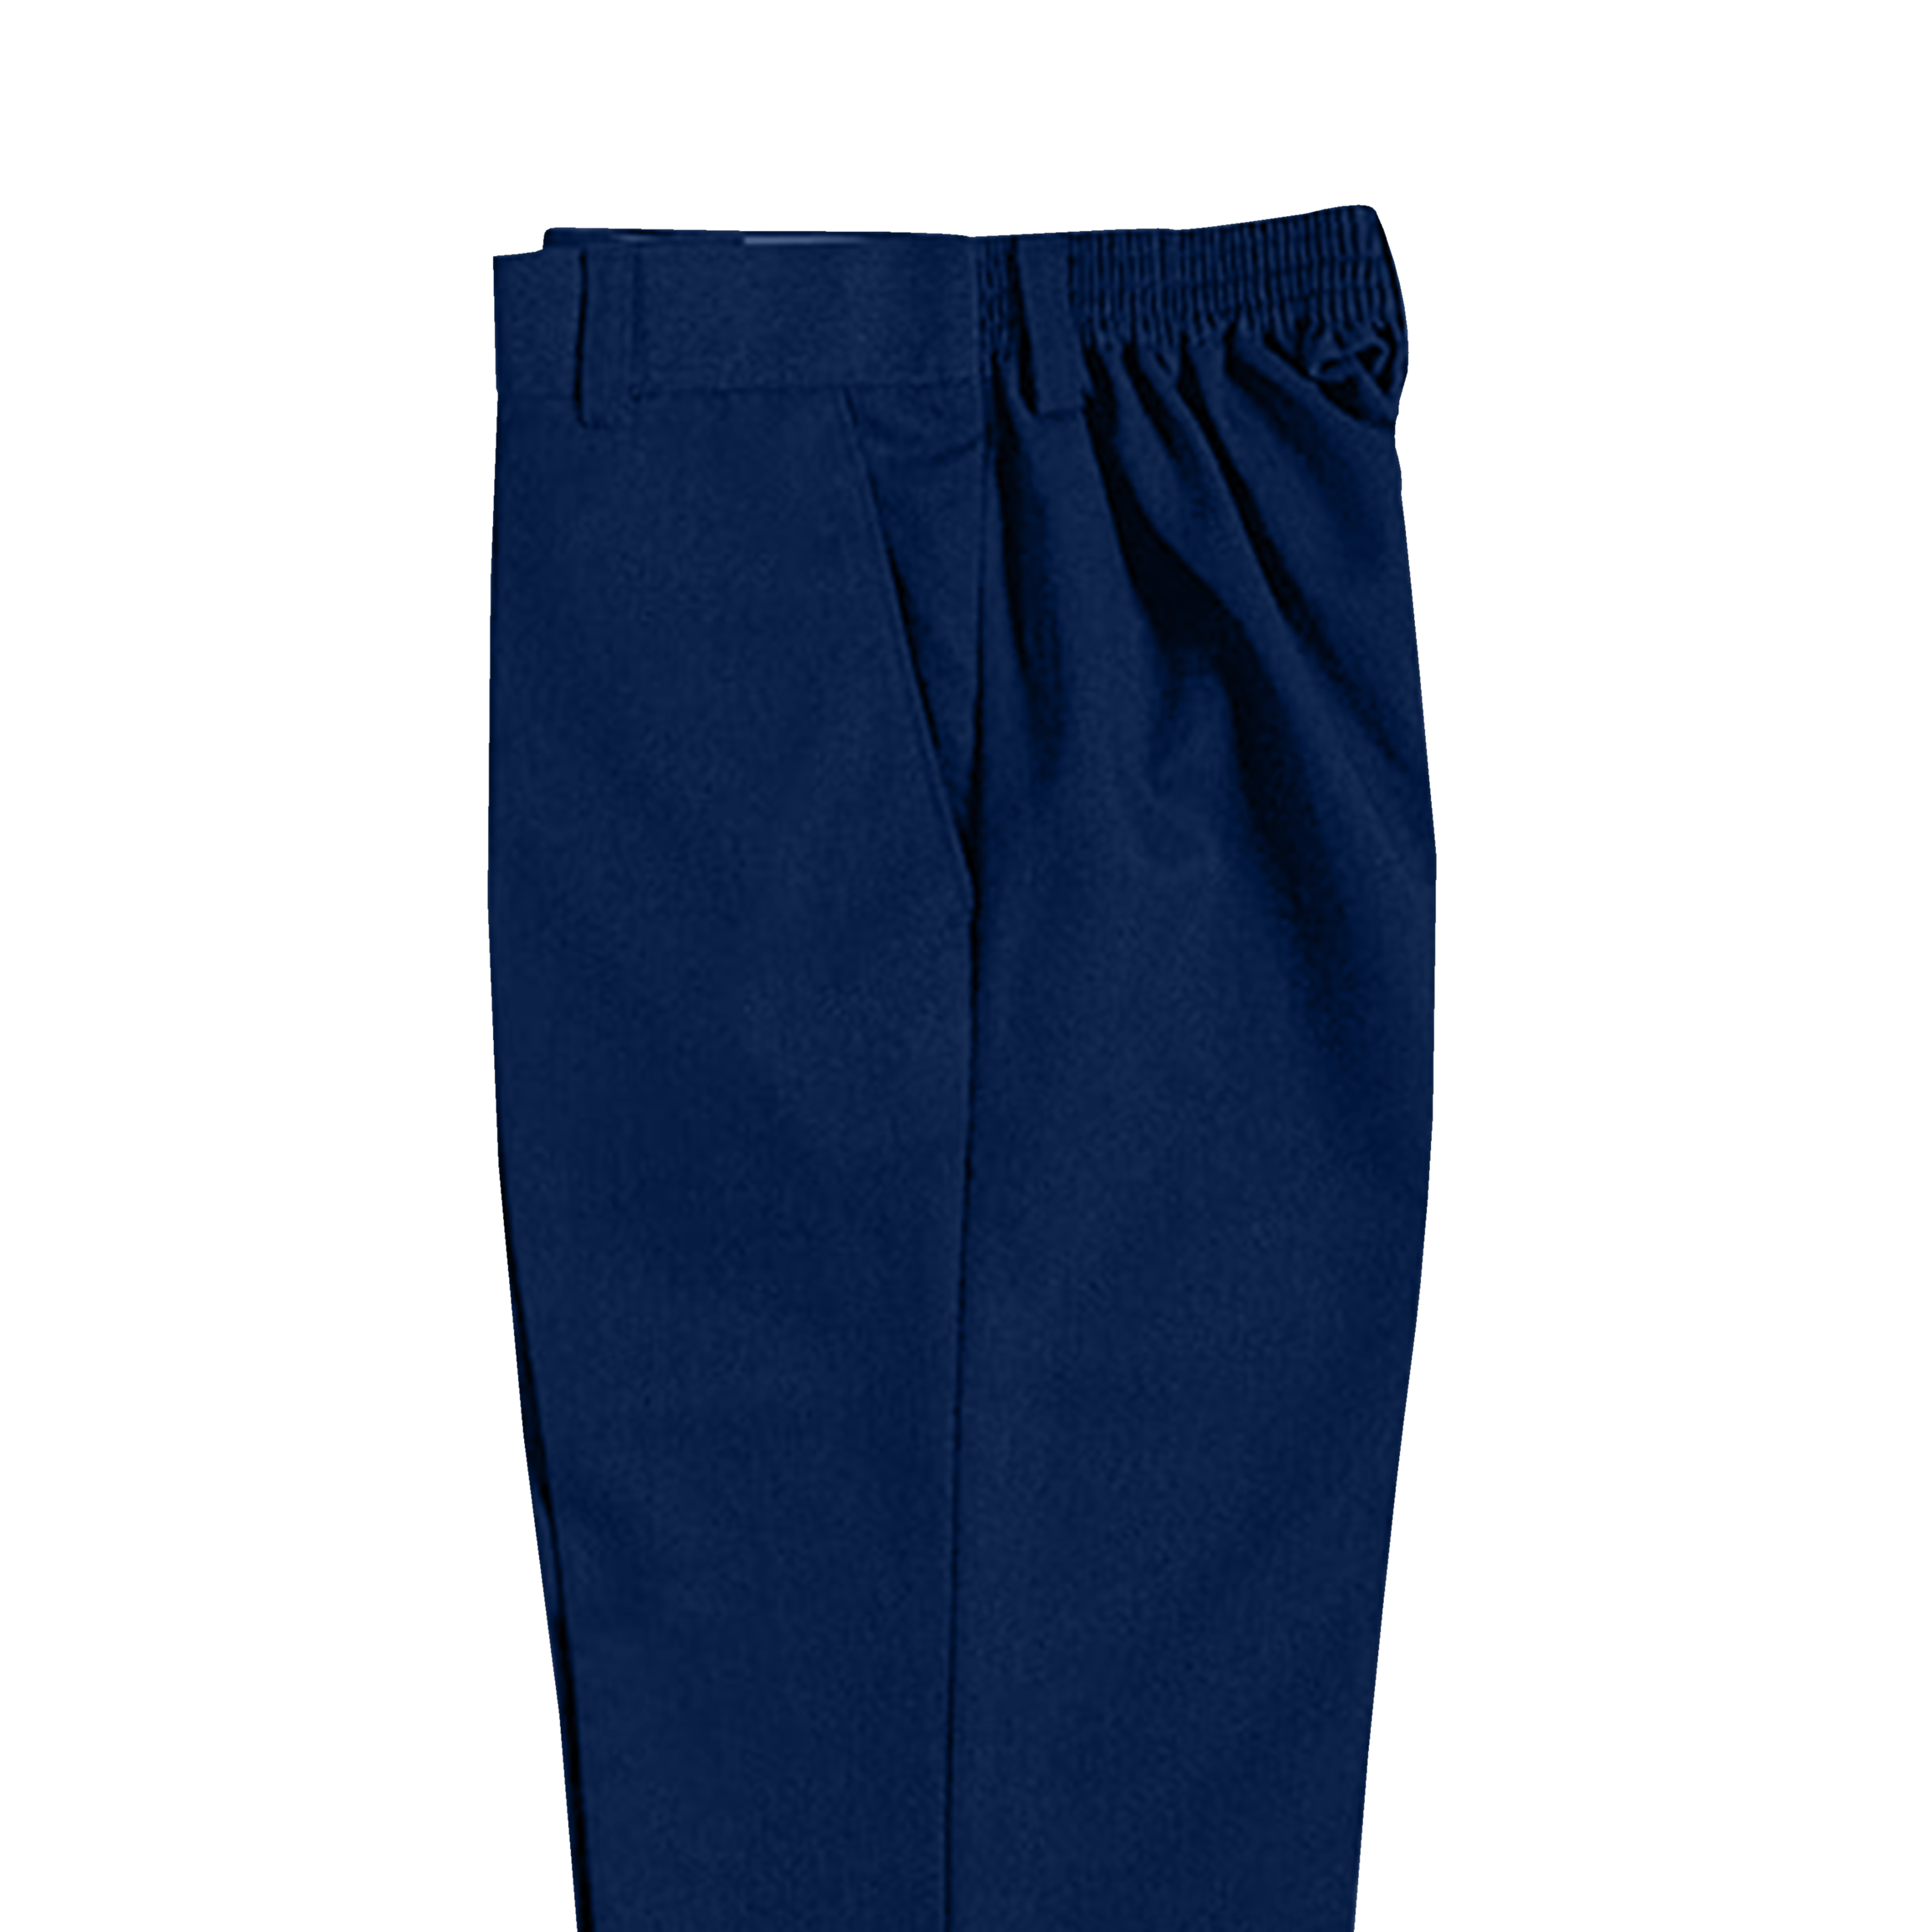 Star Links School Elastic Pants - Youniform